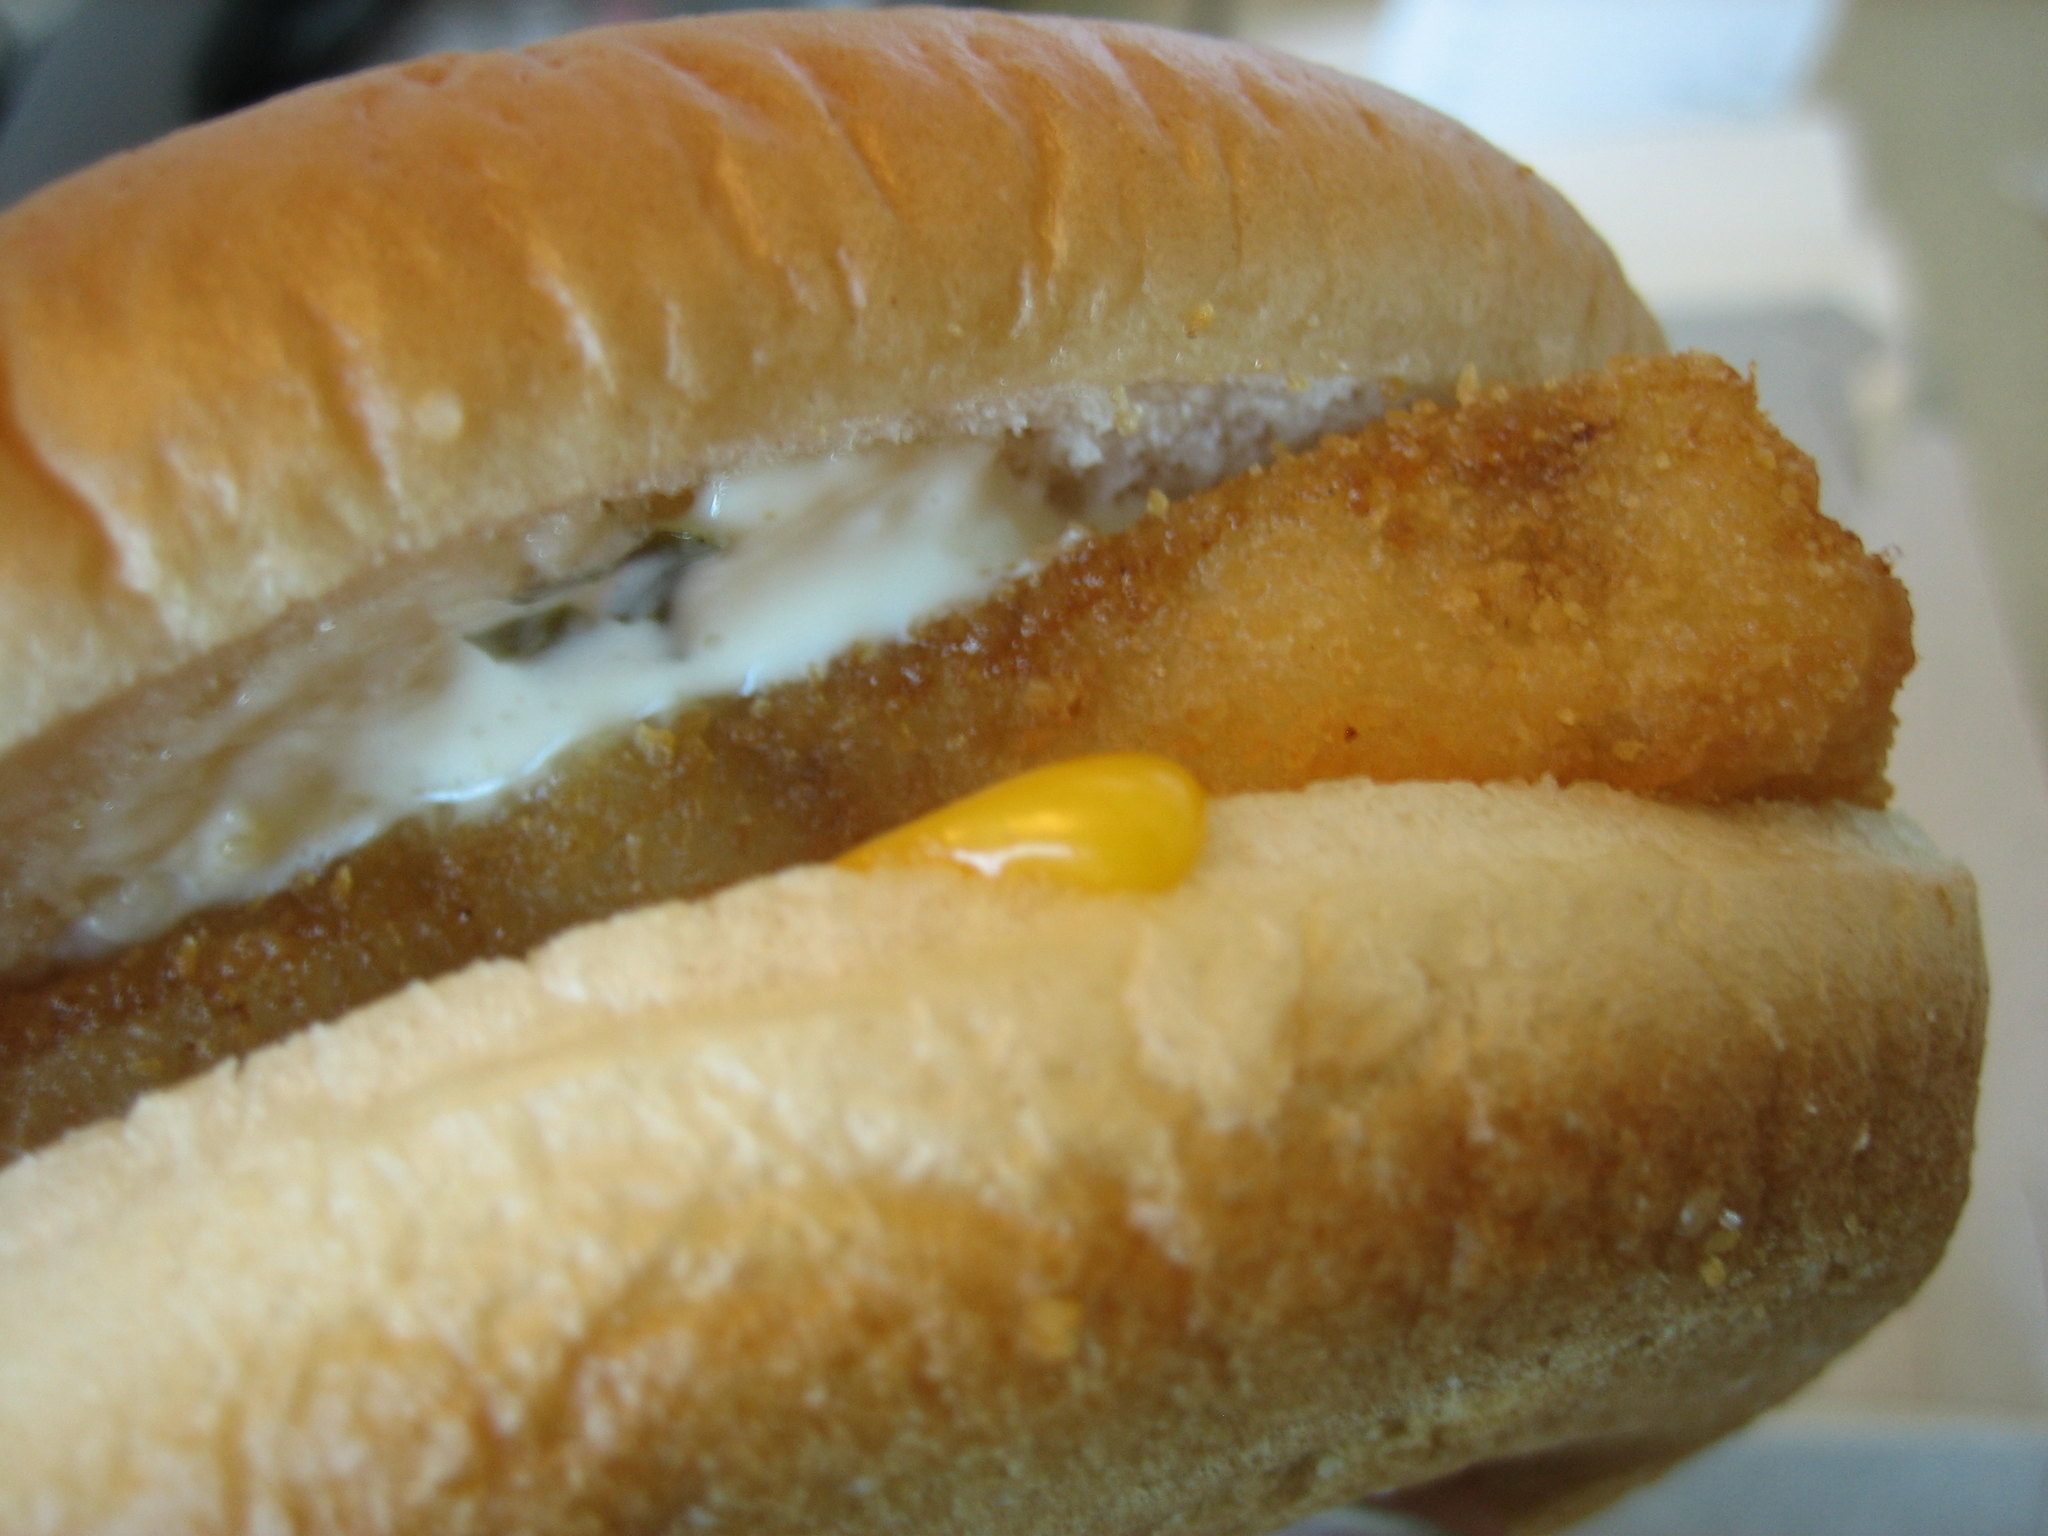 A close up of Filet-O-Fish burger